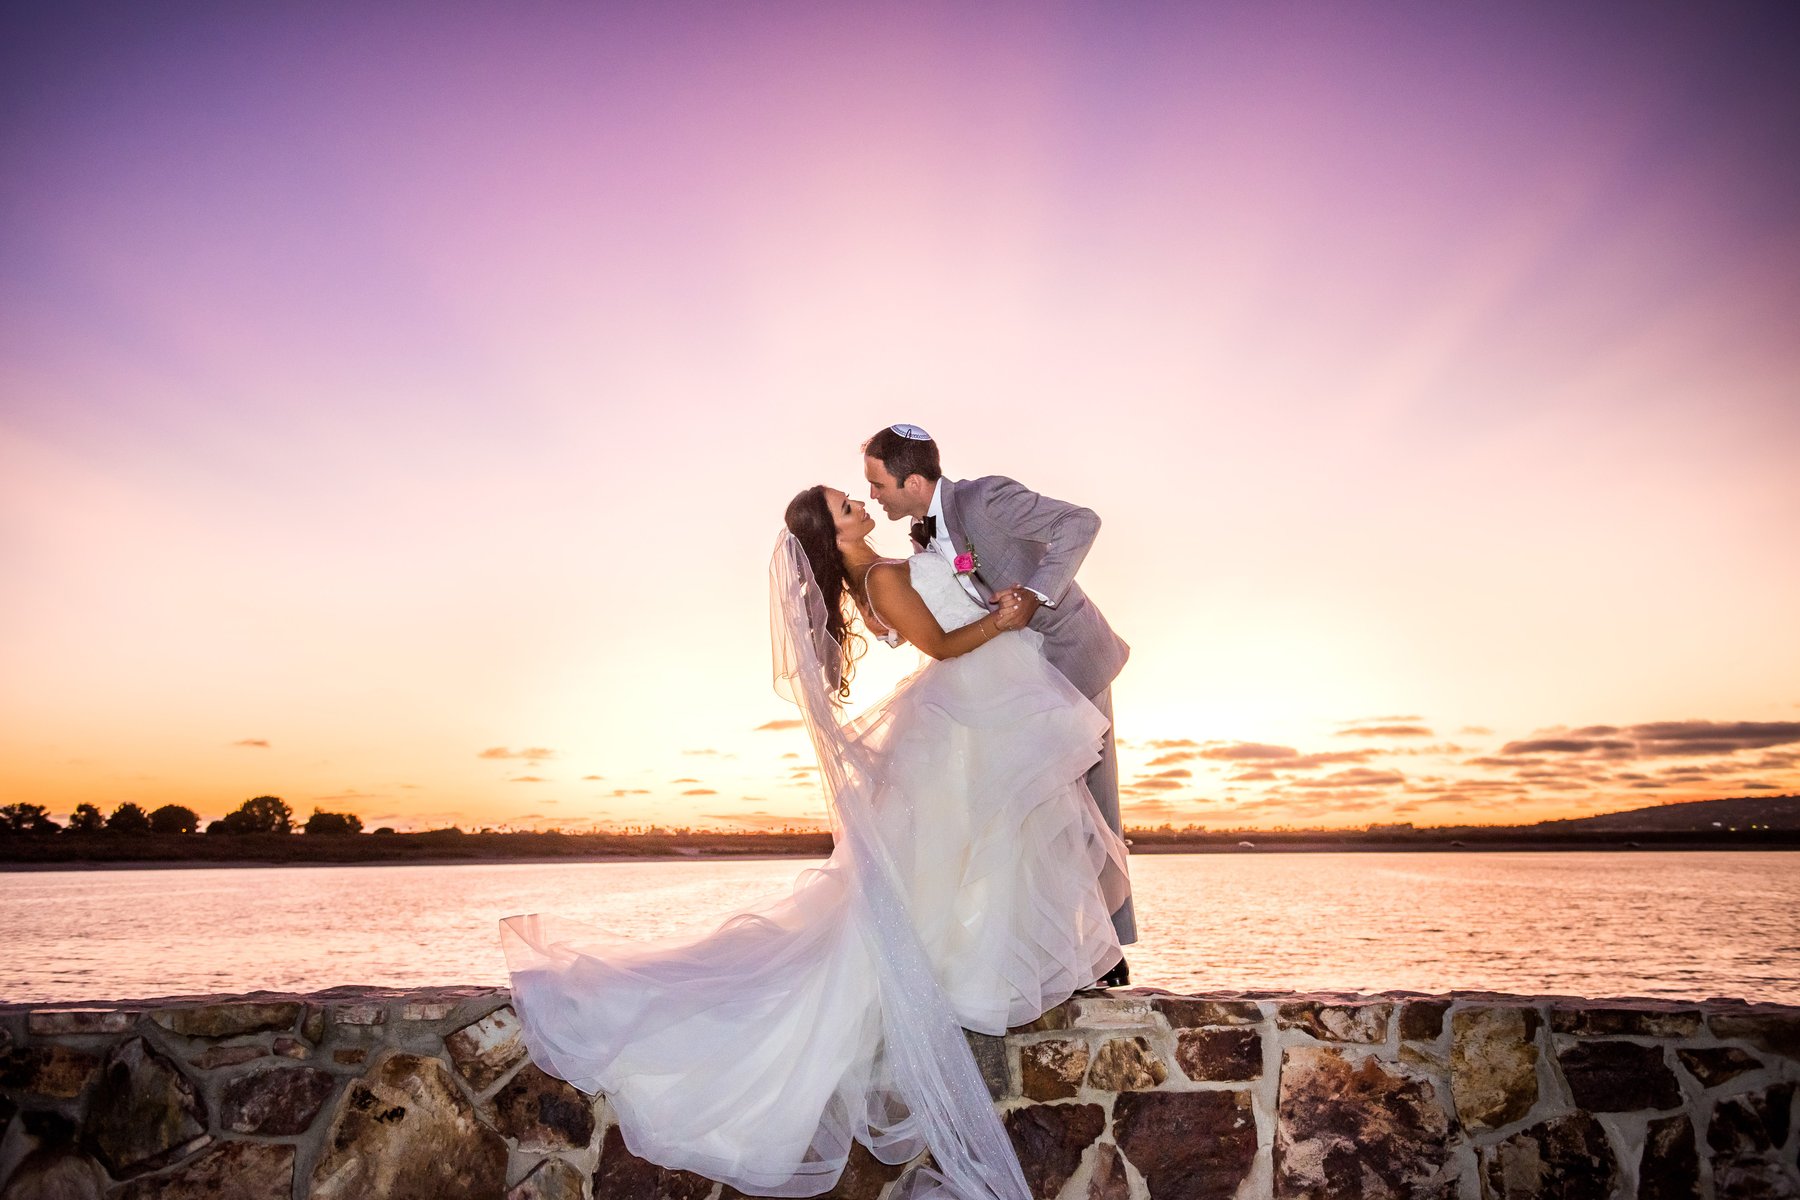 KristenWynnPhotography - Wedding Helpful Advice and Links - Benable